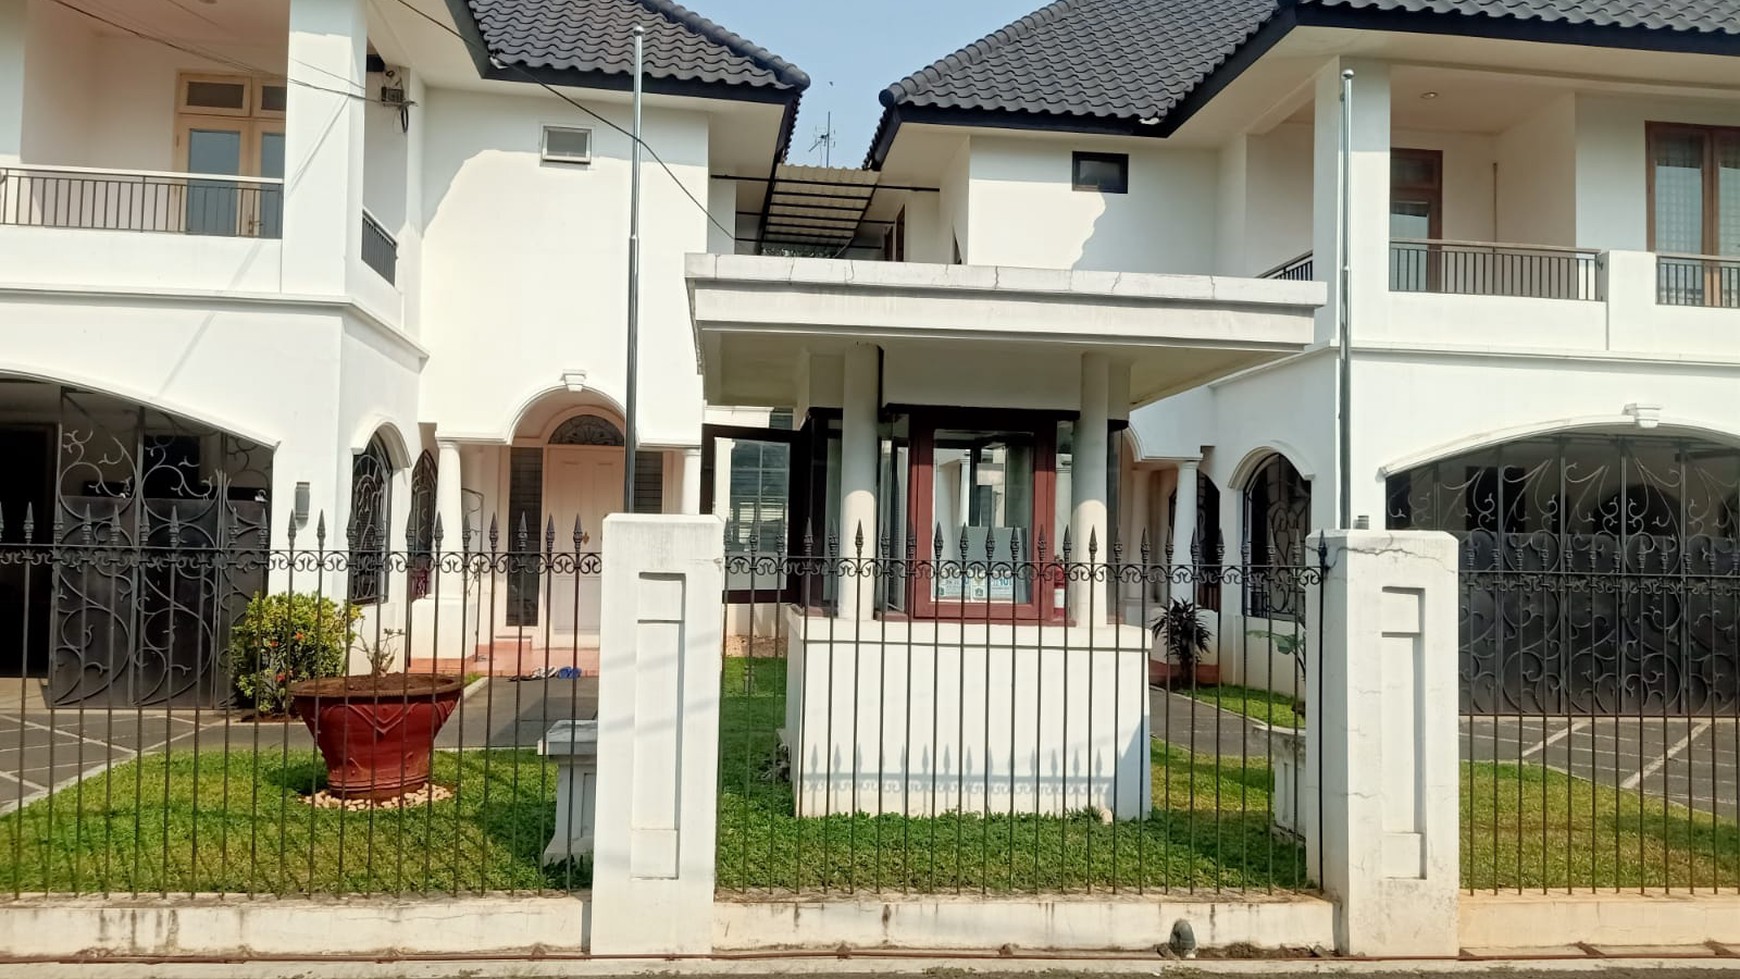 Rumah Asri 2 Lantai di Jl Gempol Ceger Jakarta Timur